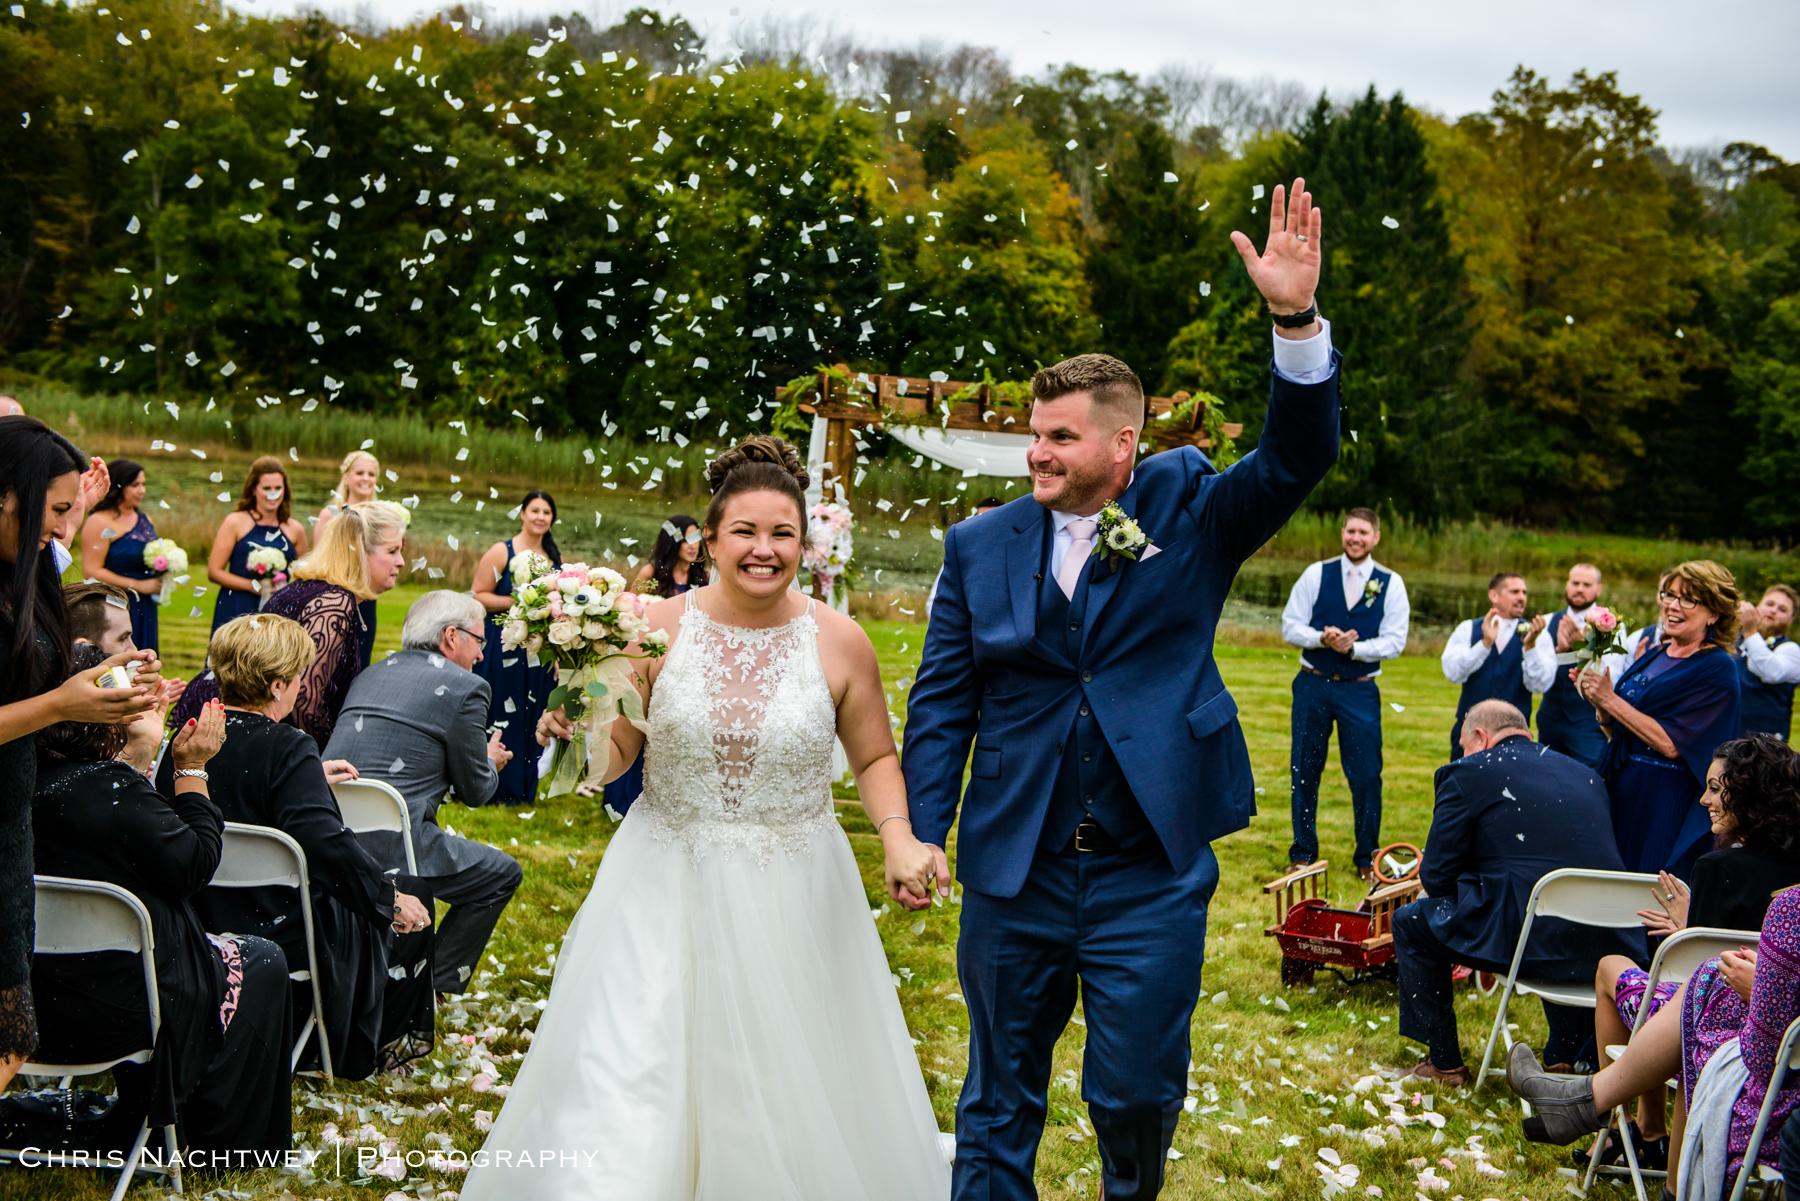 wedding-photographers-connecticut-affordable-chris-nachtwey-photography-2019-12.jpg